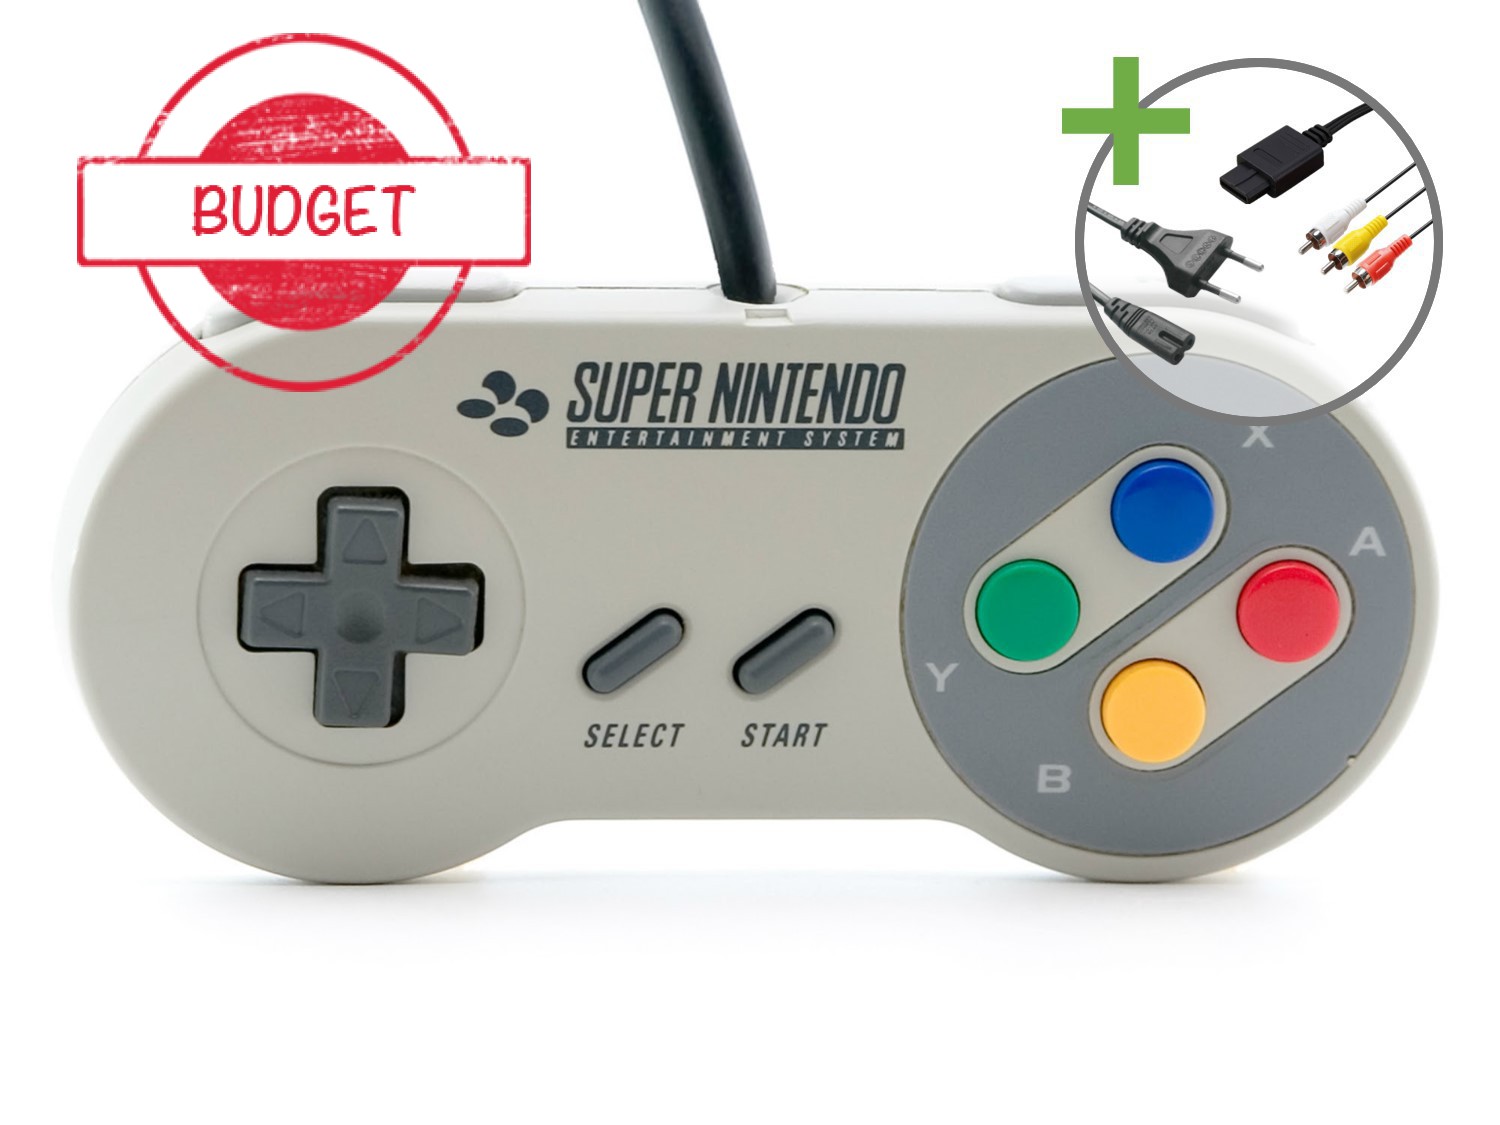 Super Nintendo Starter Pack - Super Mario World Edition - Budget - Super Nintendo Hardware - 2